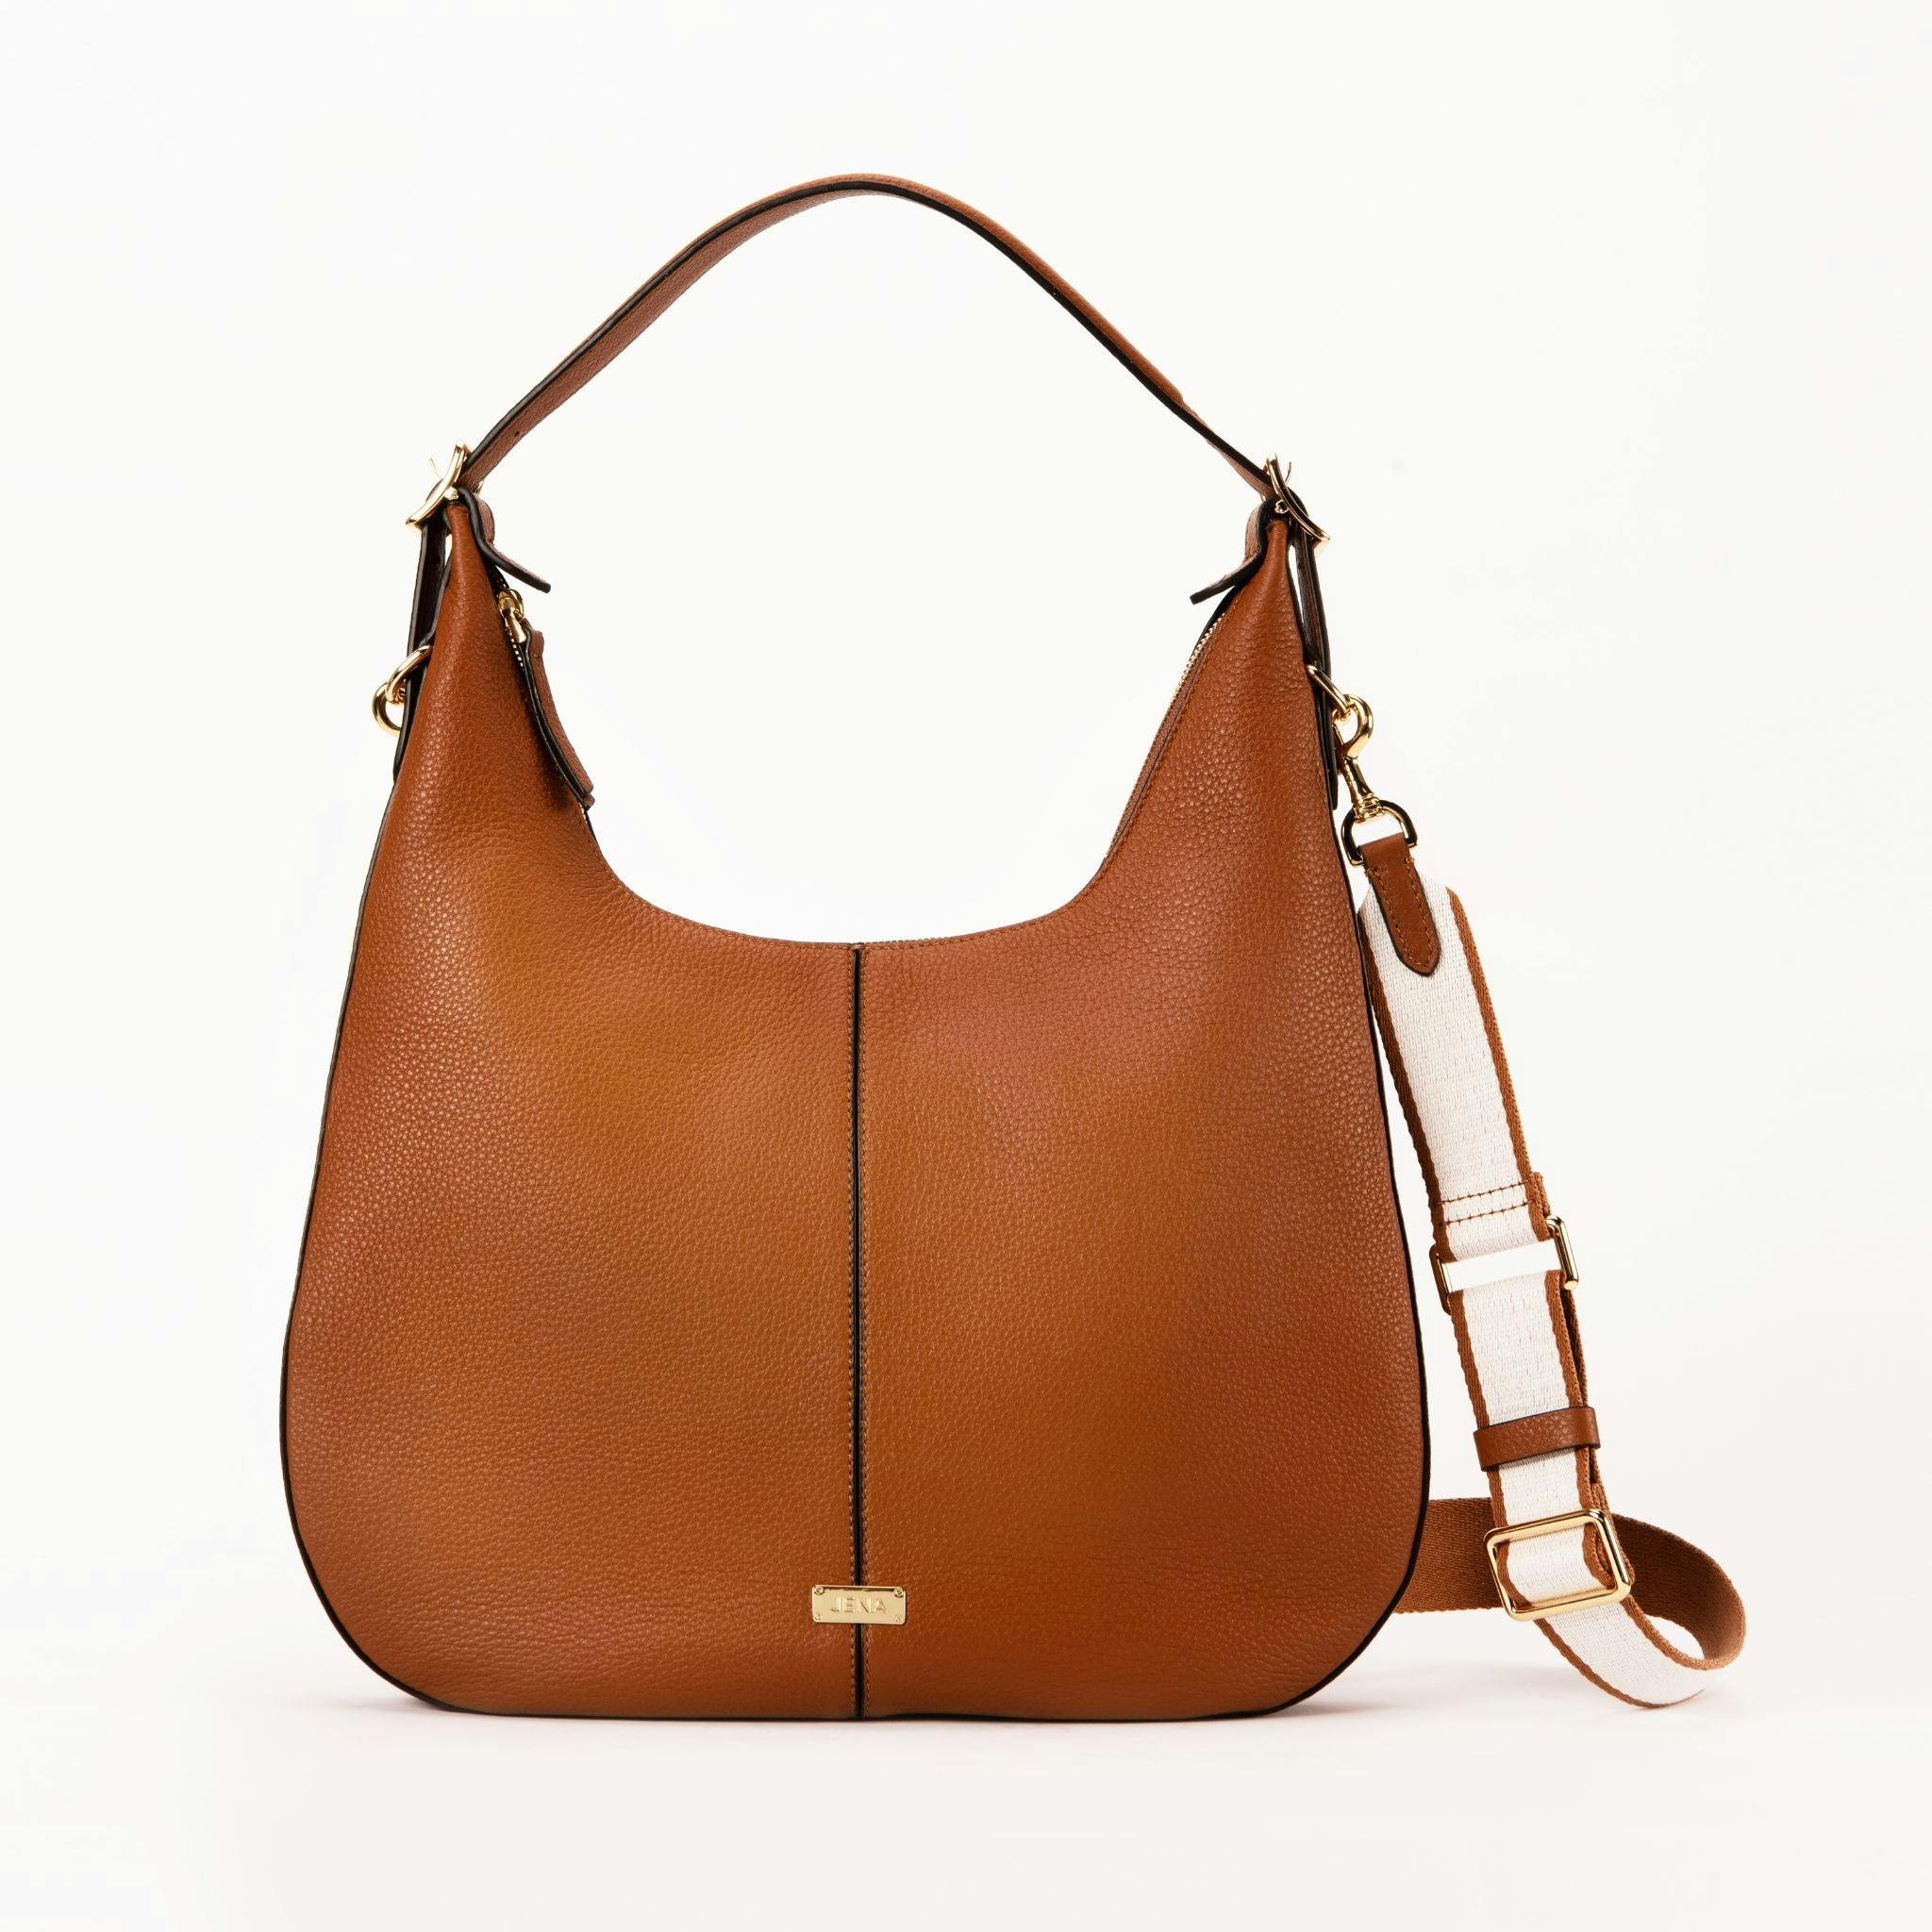 Tan Hobo Bag, a product by JENA